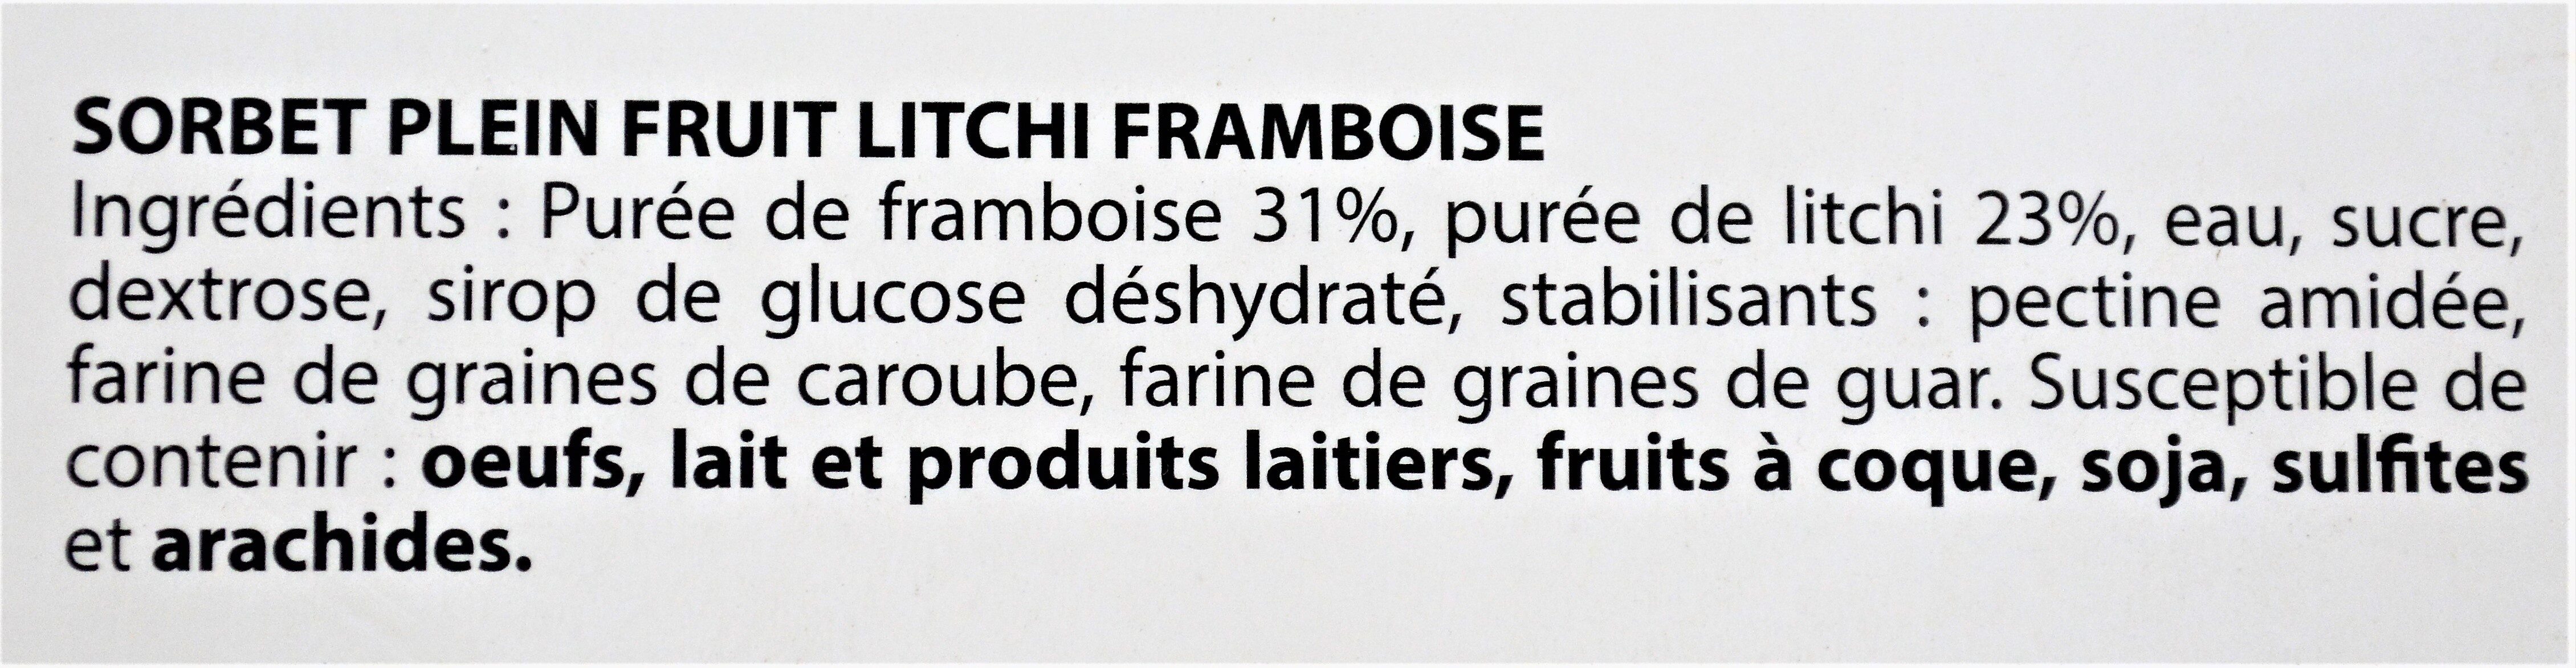 Sorbet plein fruit litchi framboise - Ingrédients